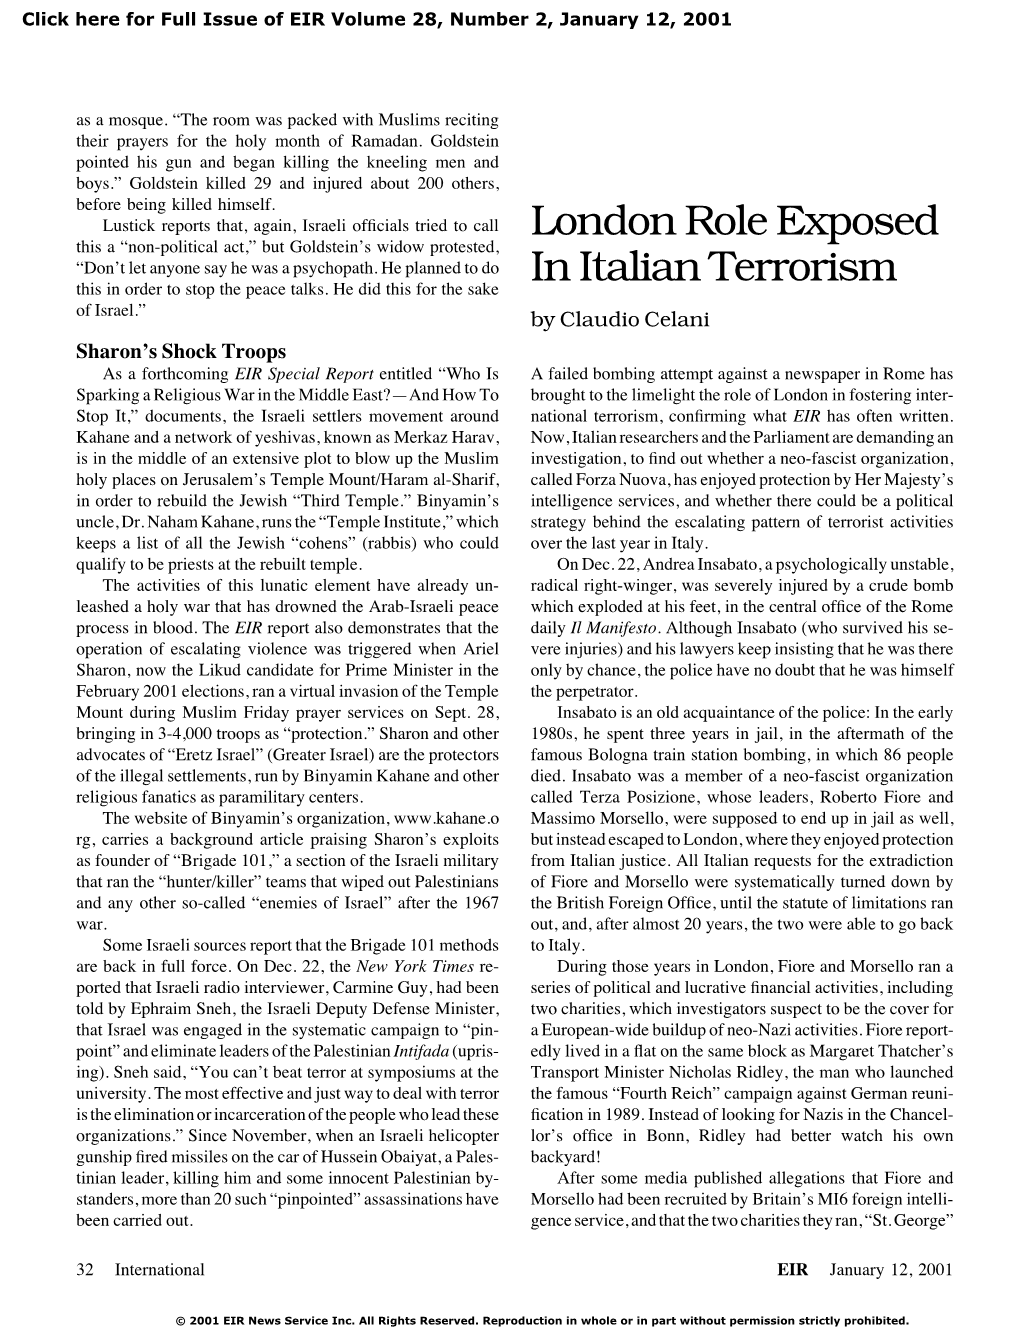 London Role Exposed in Italian Terrorism